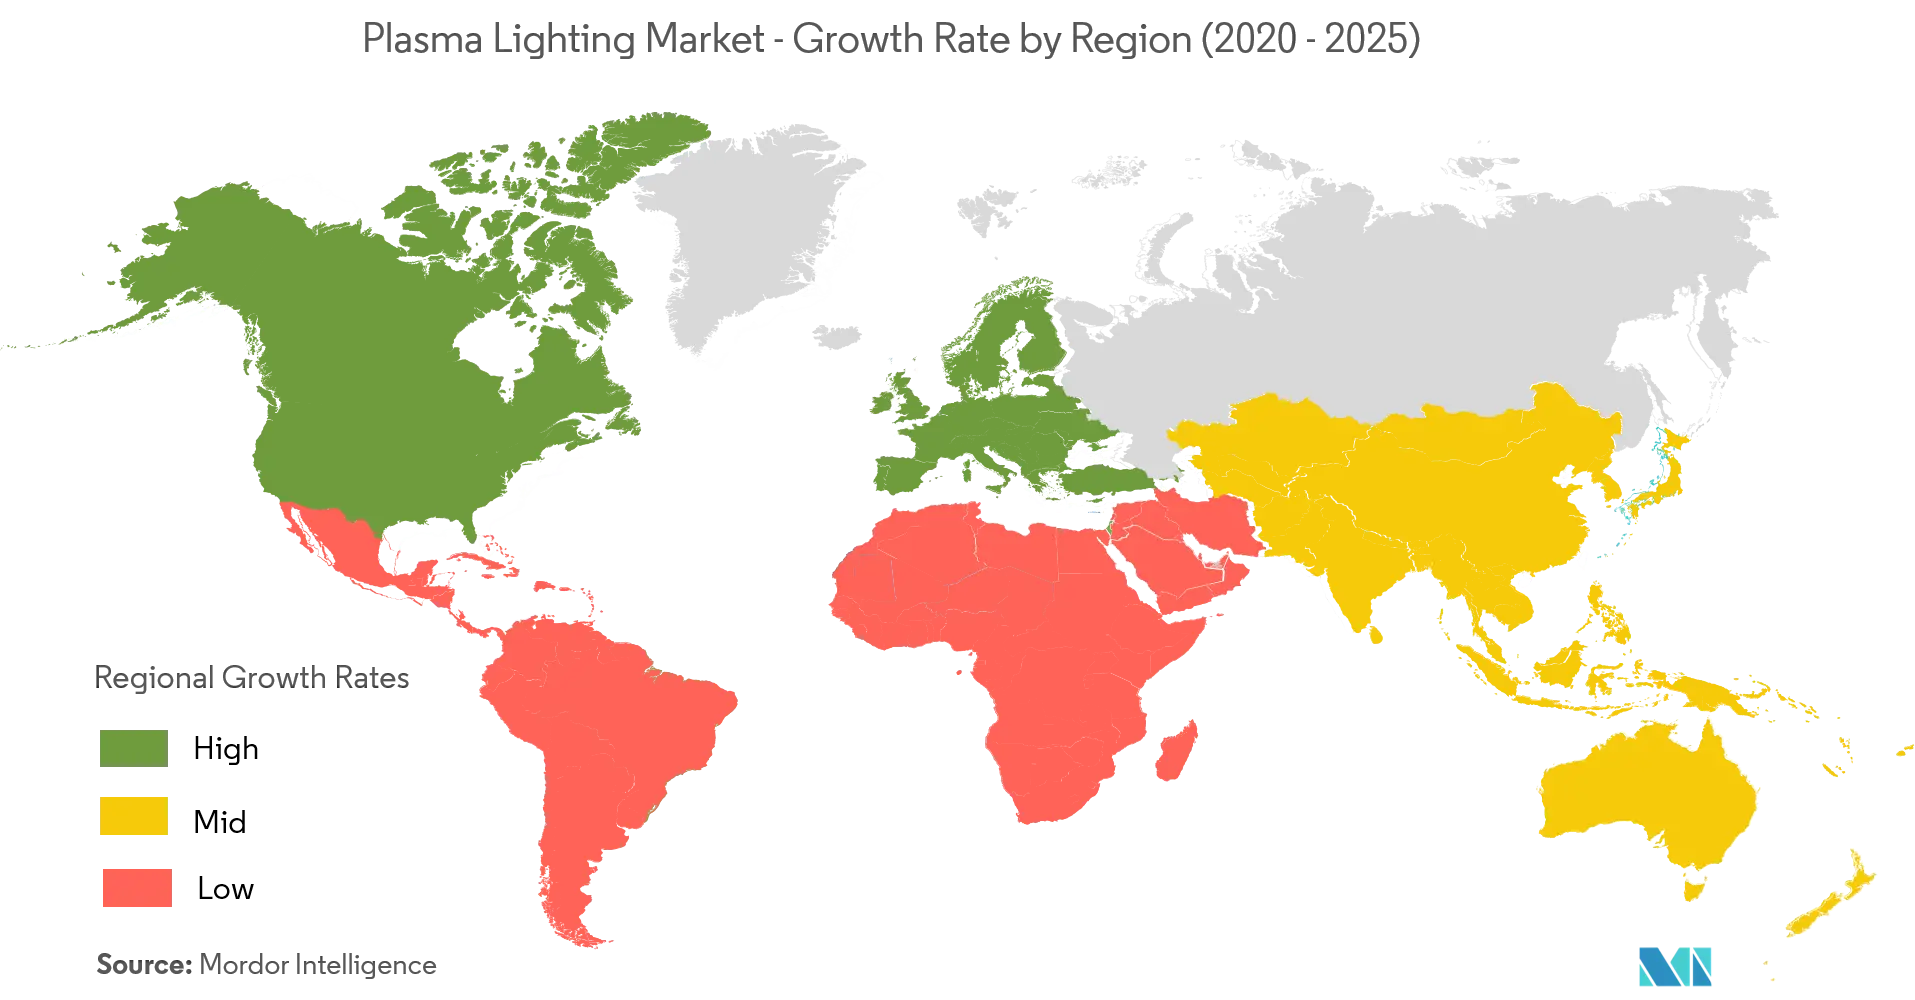 Plasma Lighting Market - Growth Rate by Region (2020-2025)